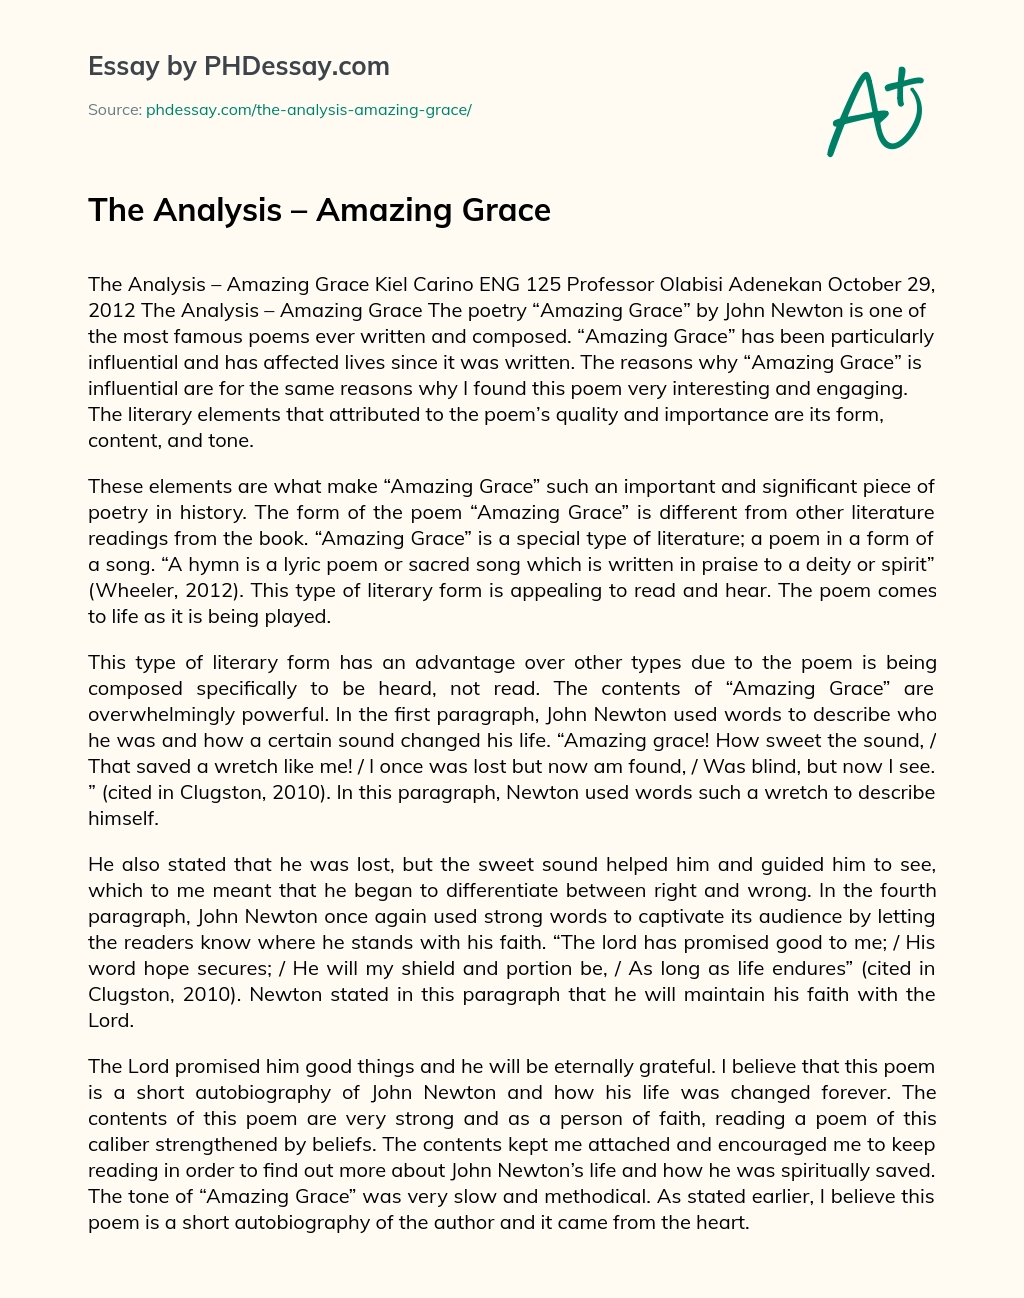 The Analysis – Amazing Grace essay